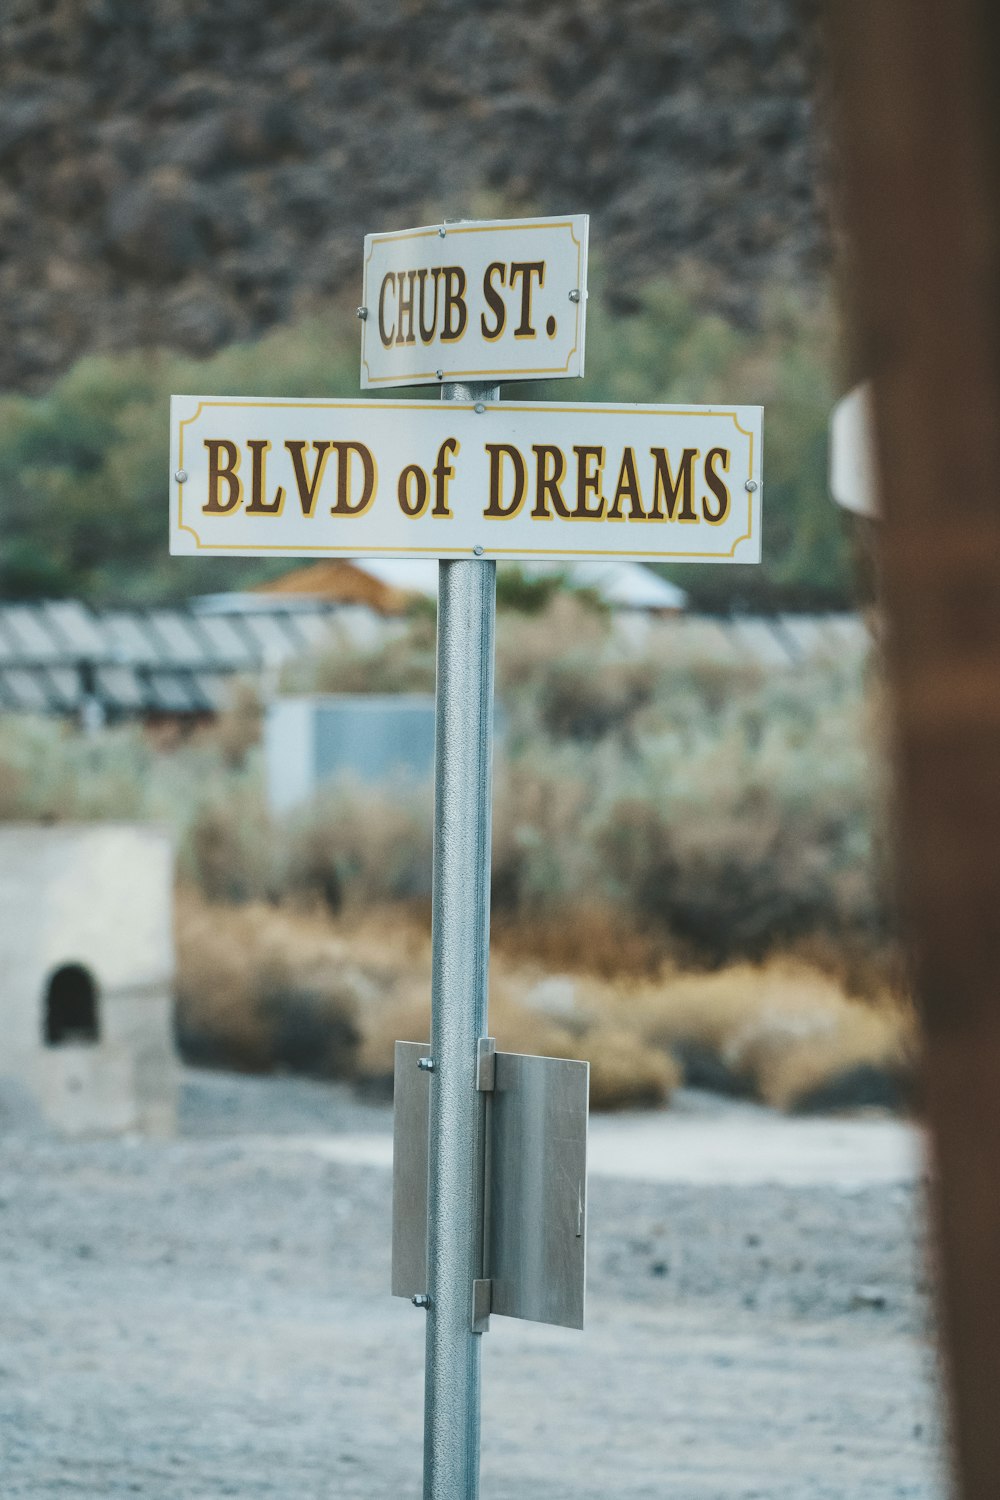 Chub St.와 Blvd of Dreams 도로 표지판의 선택적 초점 사진